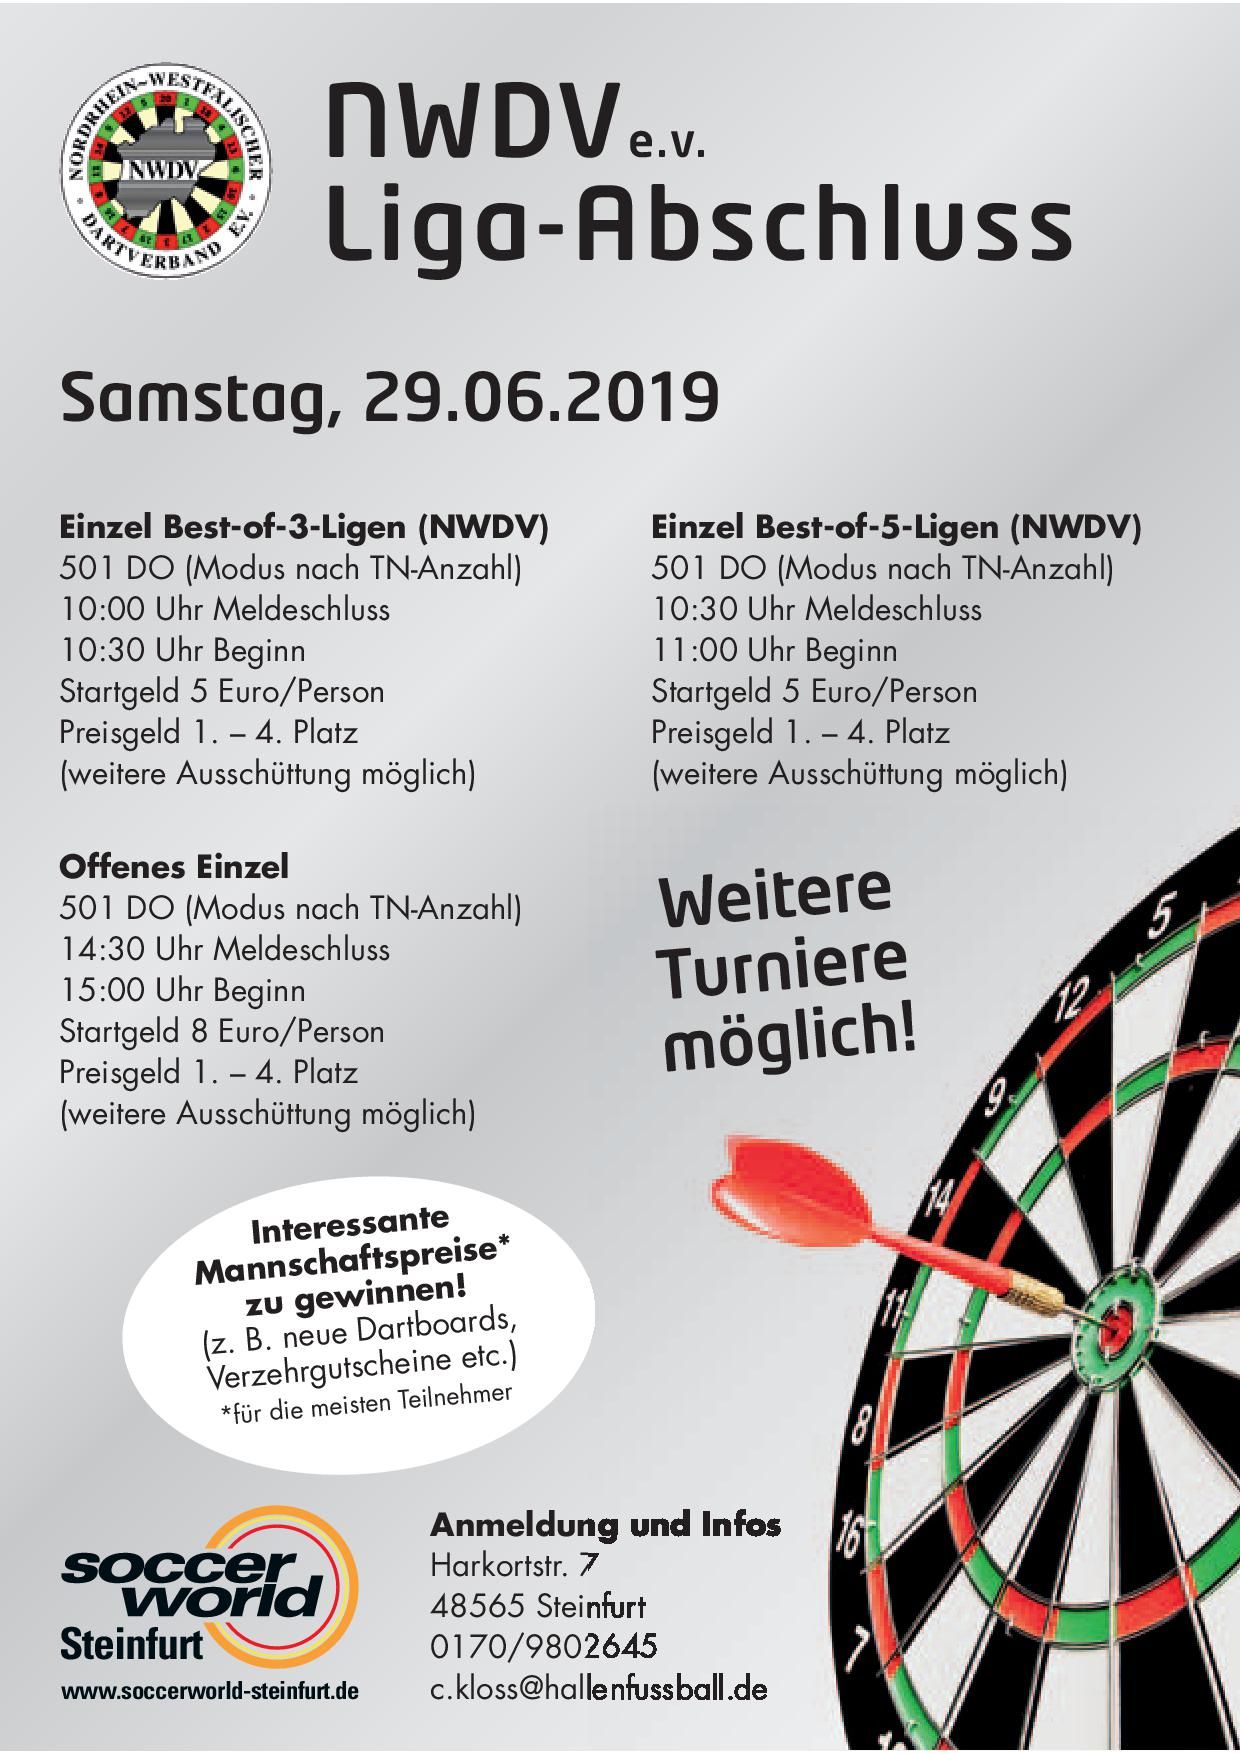 NWDV Liga Abschluß 2019 | Soccerworld Steinfurt